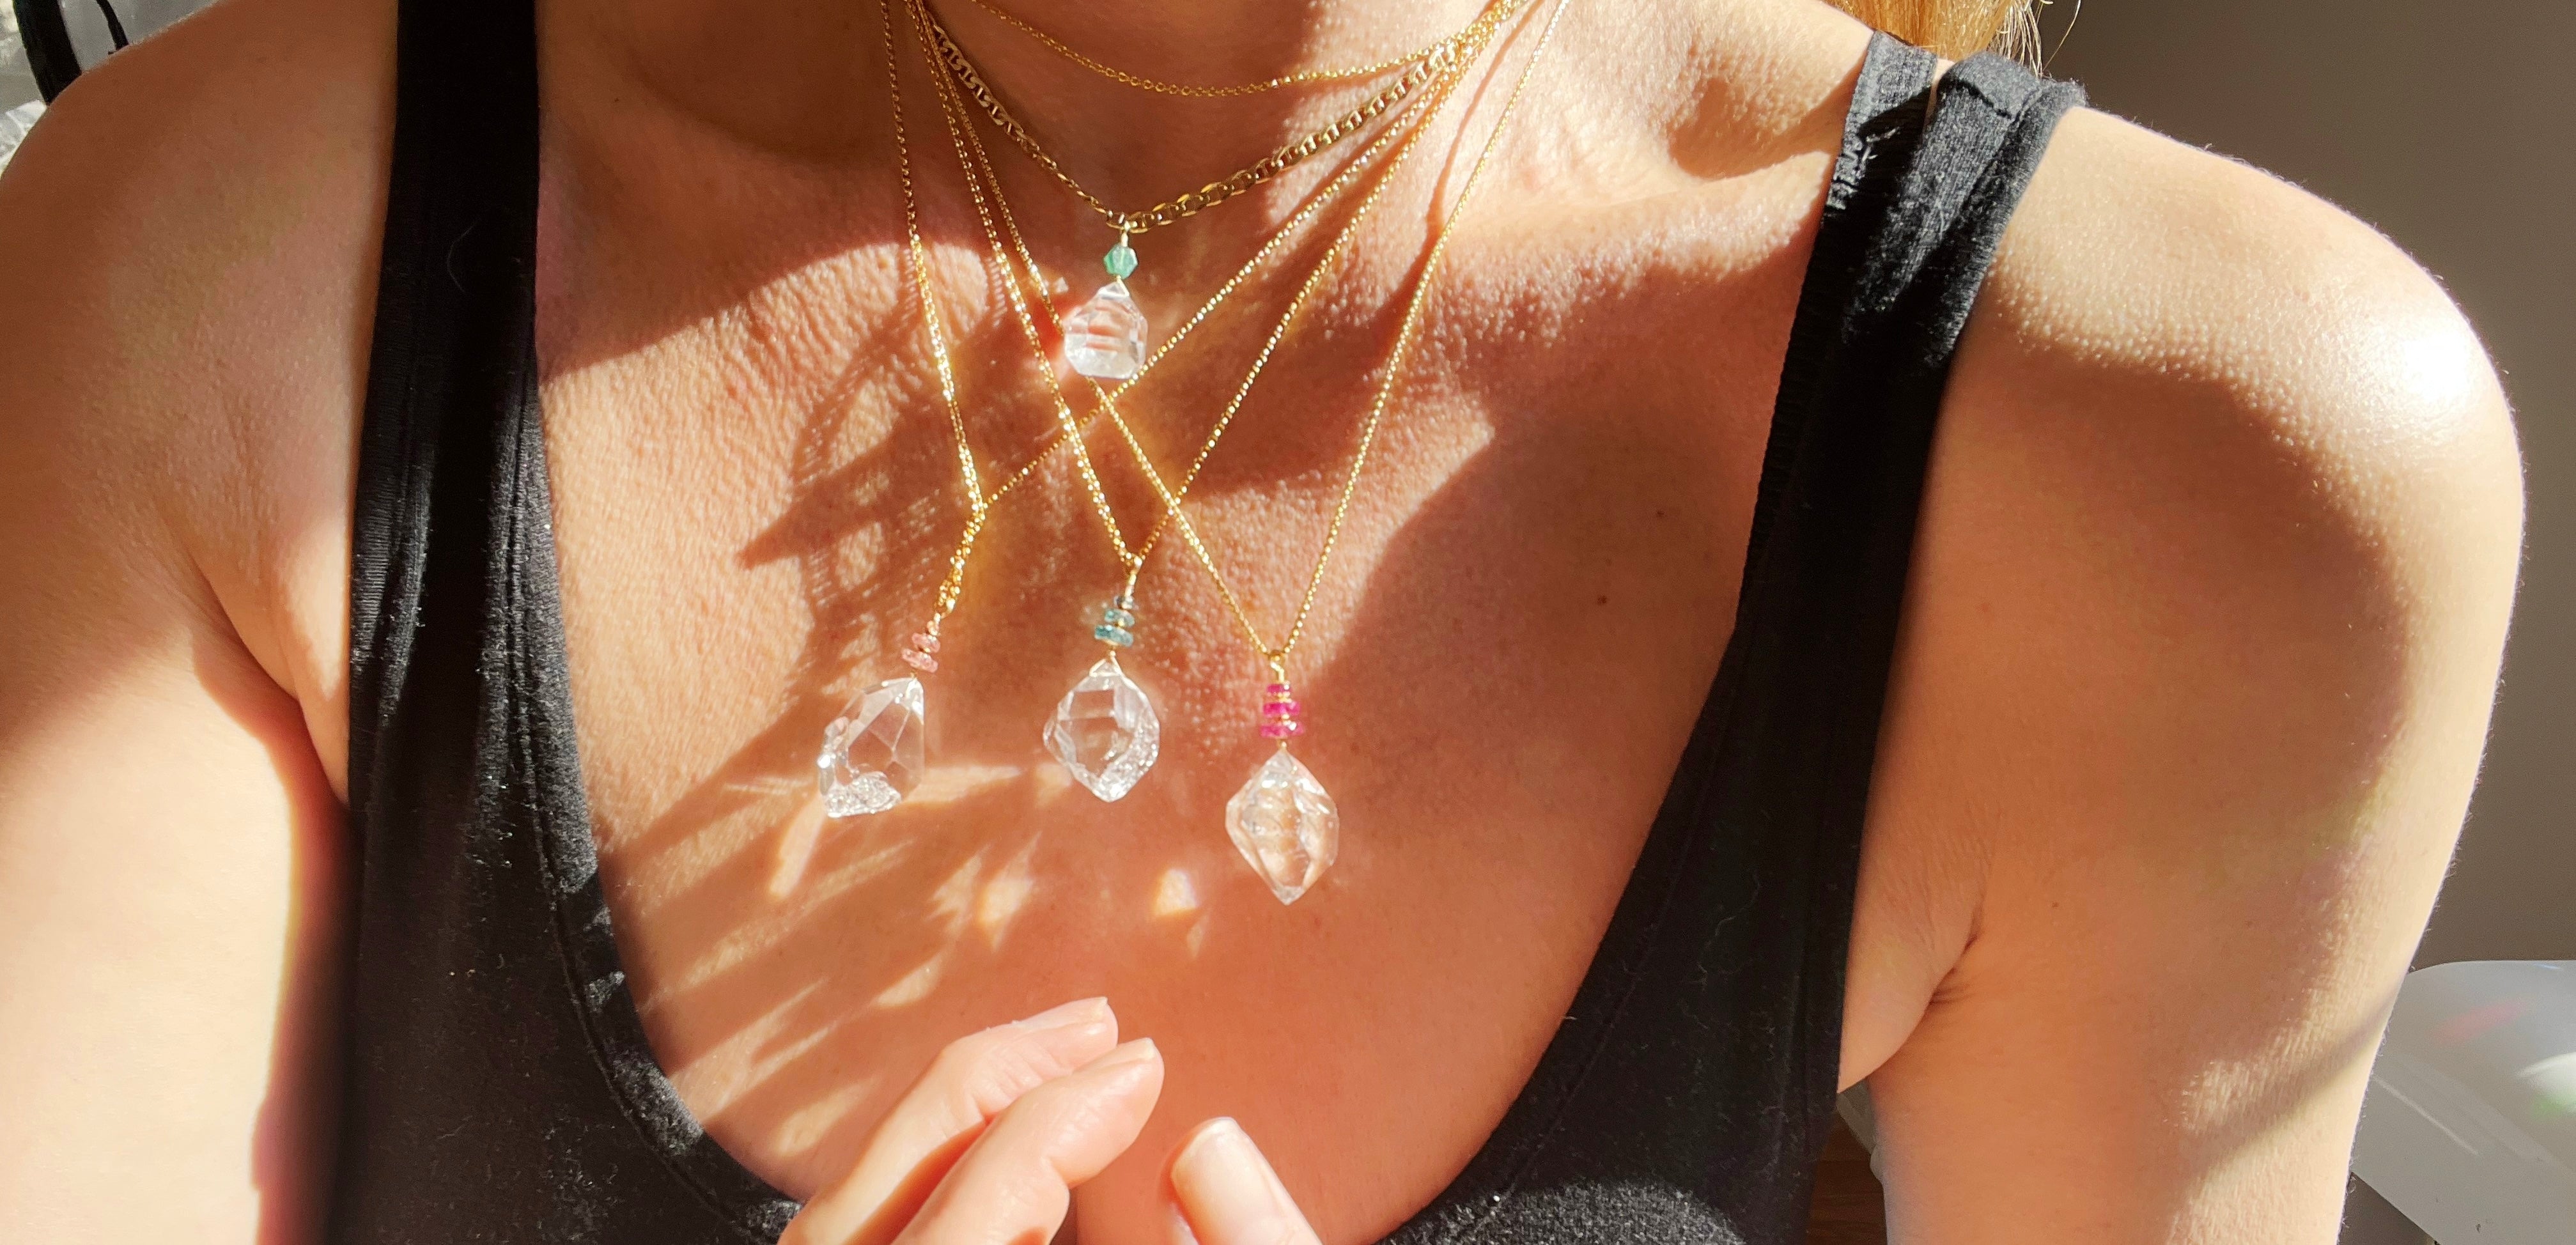 Aqua Herkimer Diamond Necklace